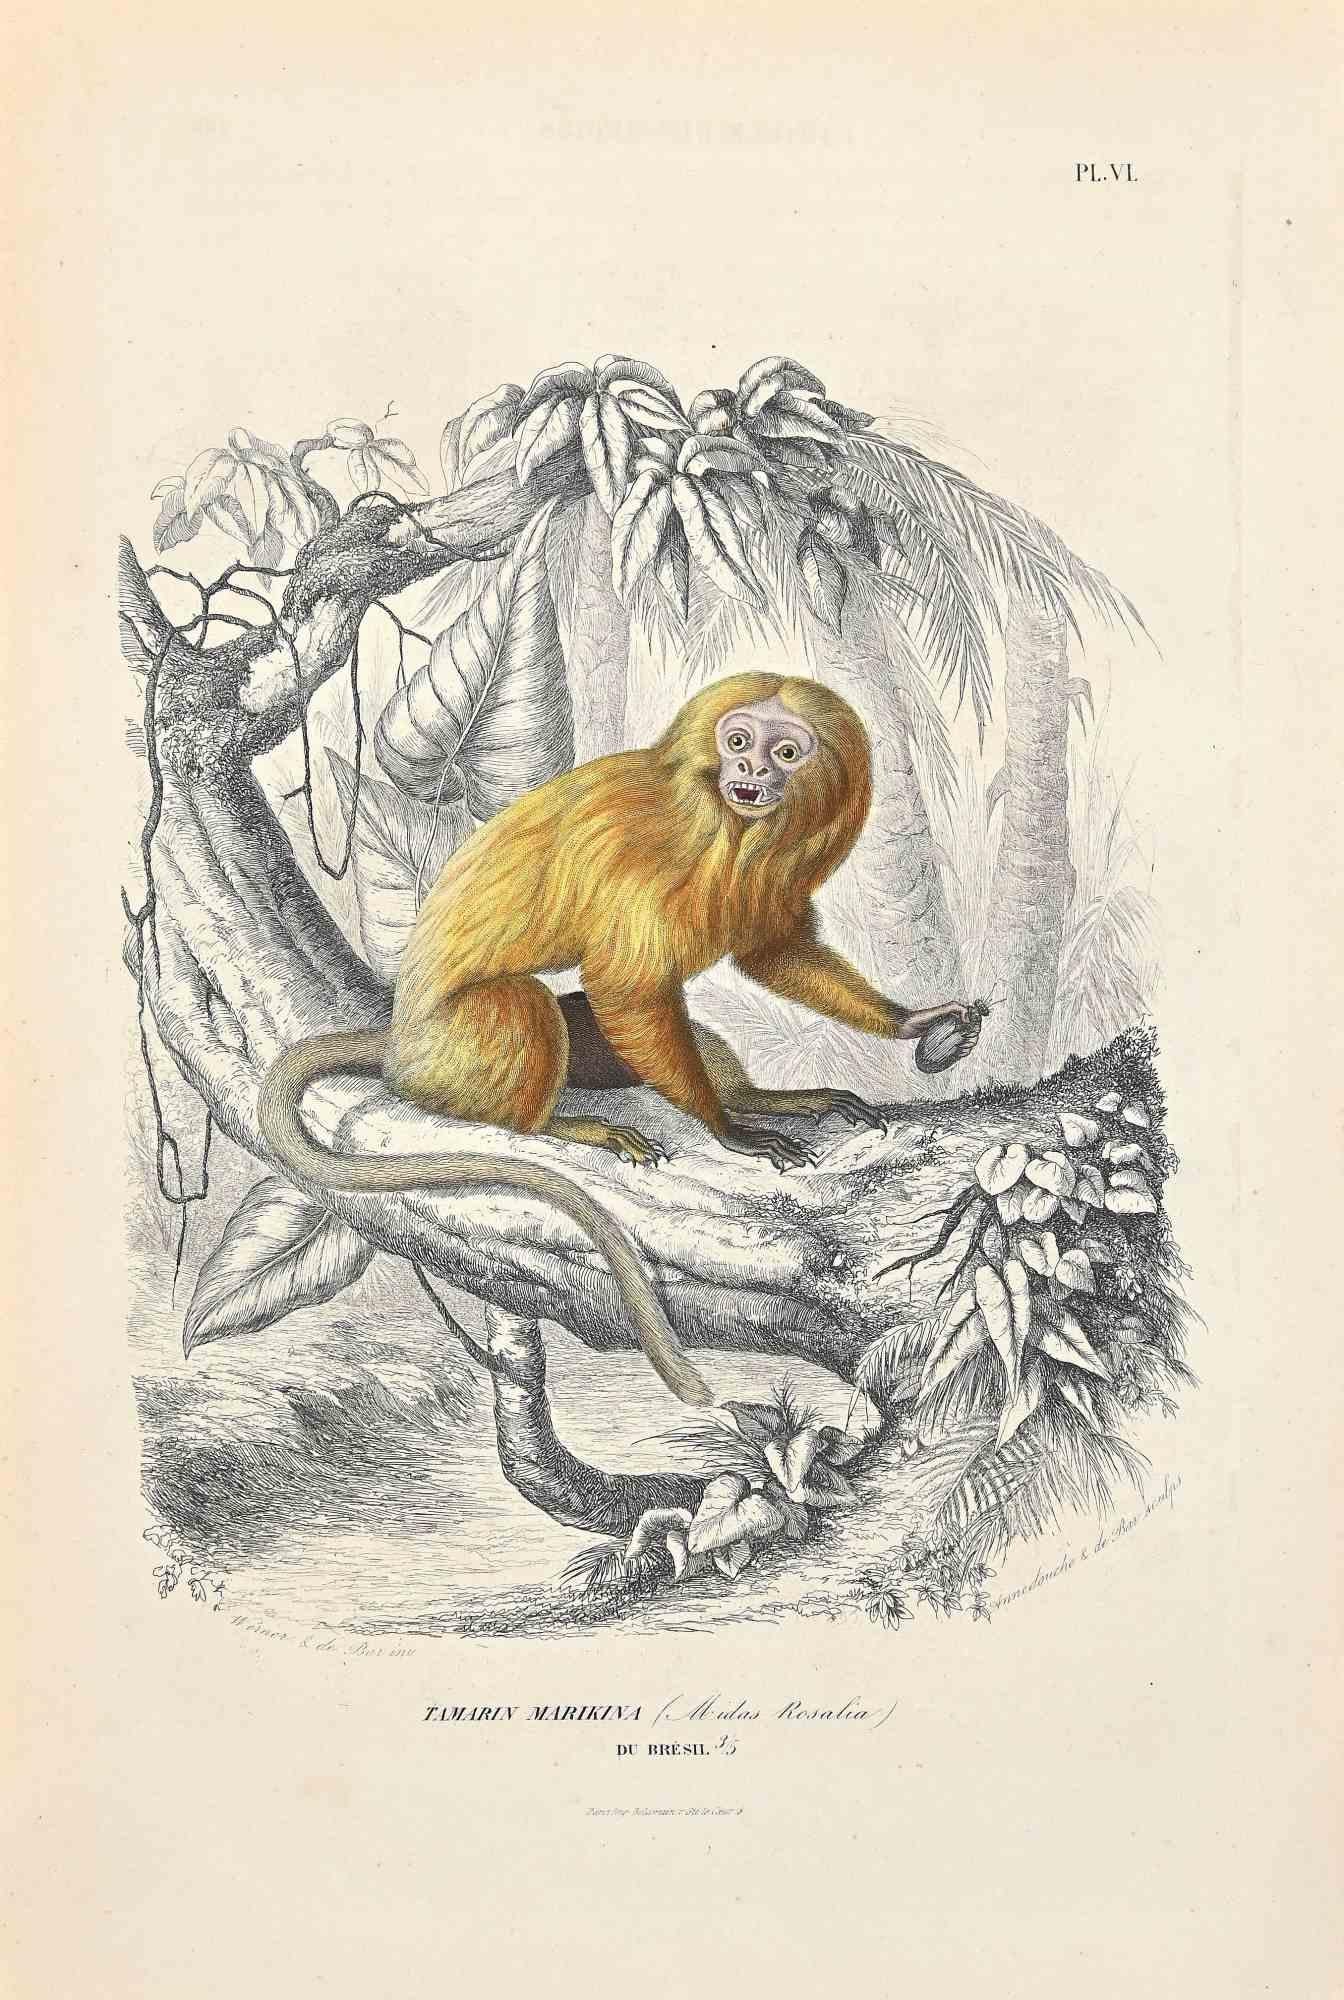 Tamarin - Original Lithograph by Paul Gervais - 1854